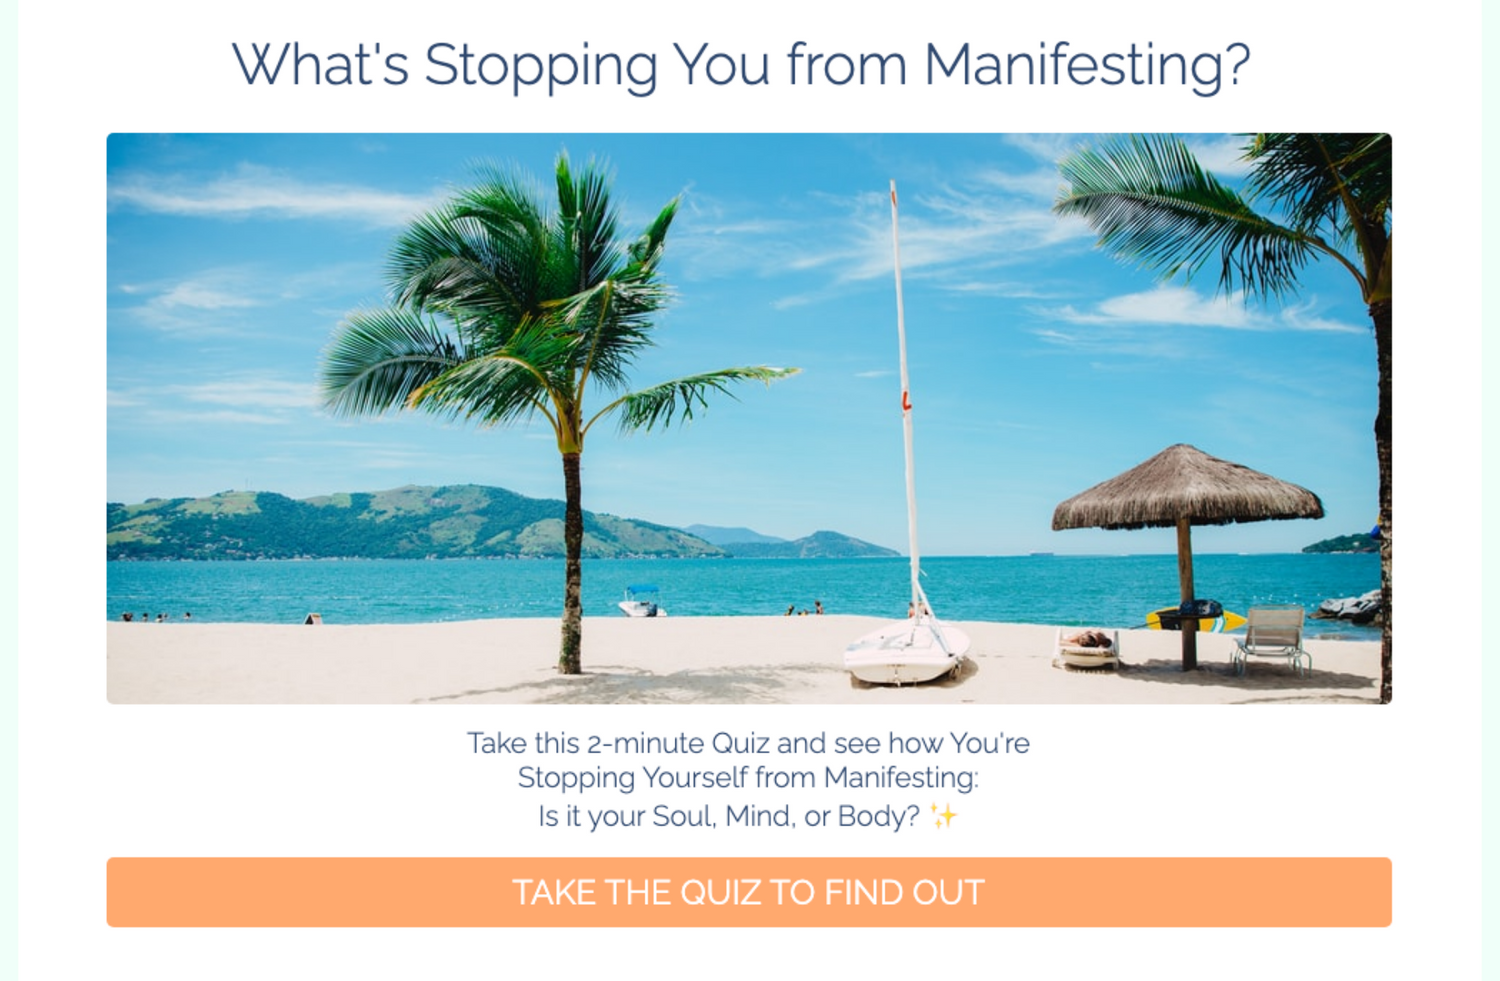 Take the Manifesting Quiz...